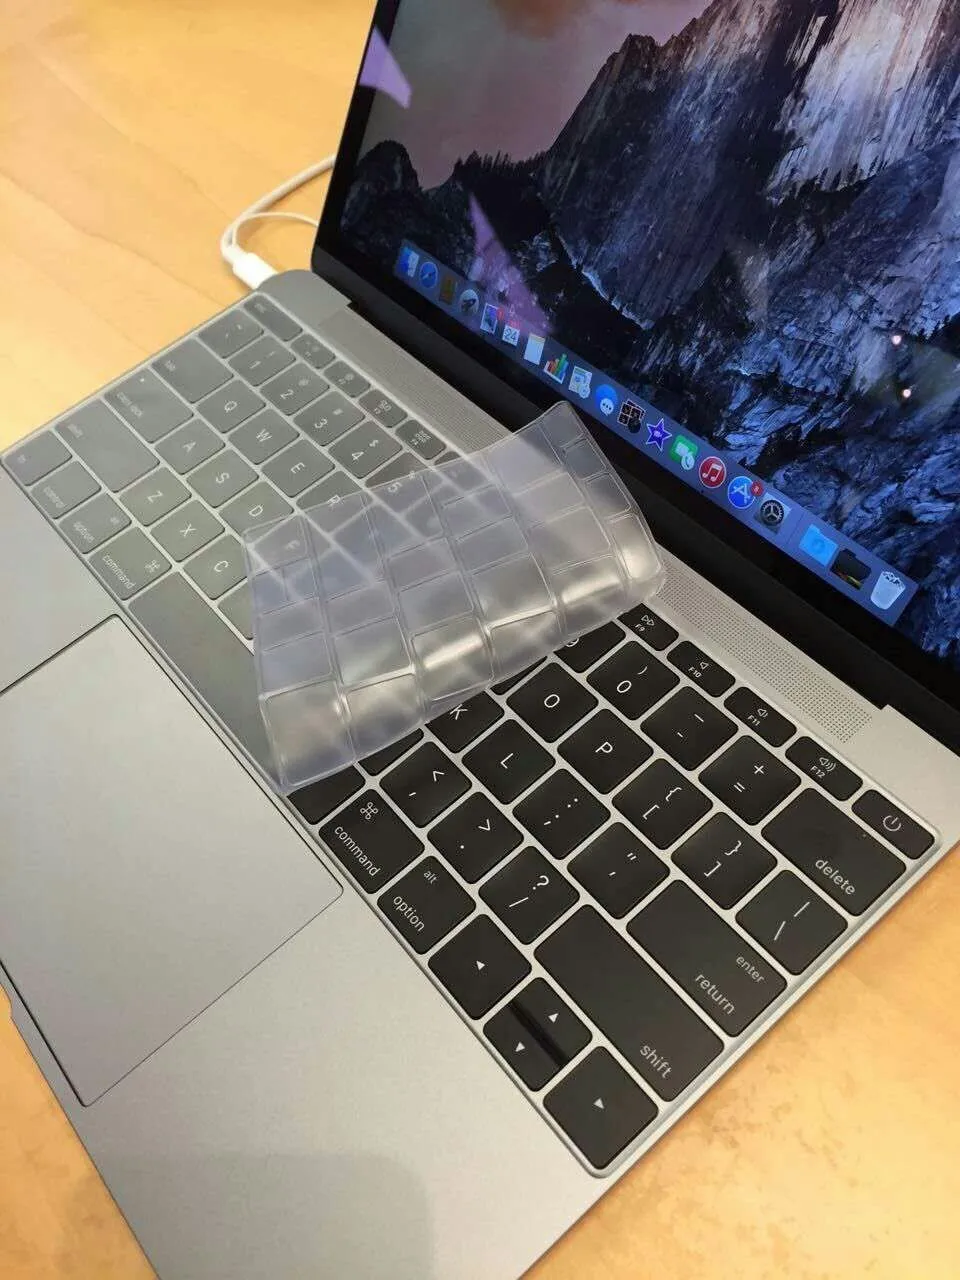 XSKN бренд, для нового MacBook 12 дюймов ультра тонкий прозрачный, мягкий пленка для клавиатуры из ТПУ кожи, крышка клавиатуры для Macbook 12